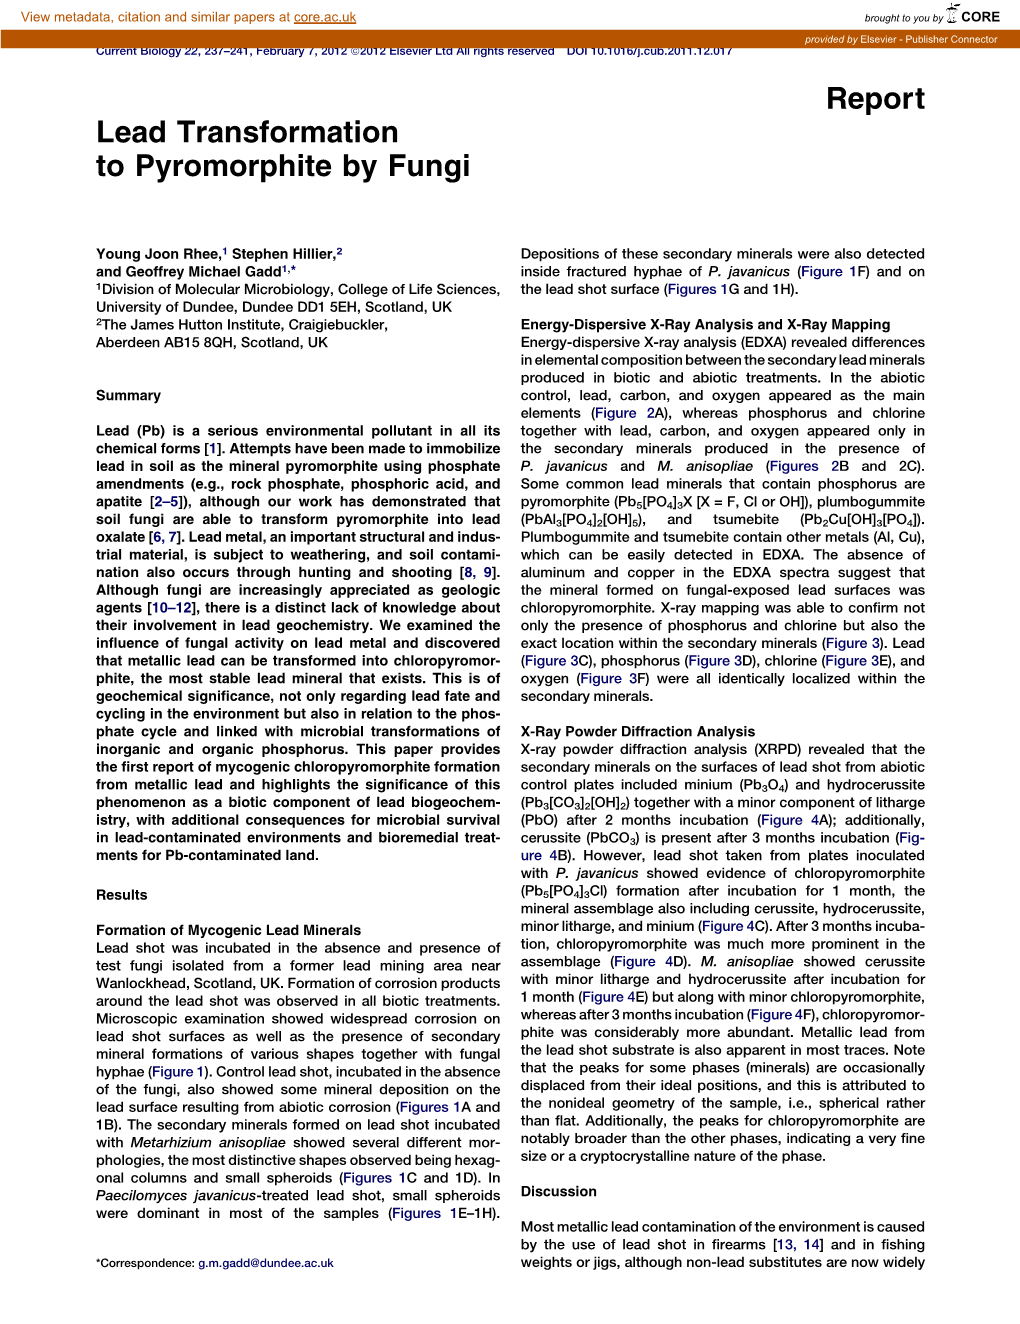 Lead Transformation to Pyromorphite by Fungi